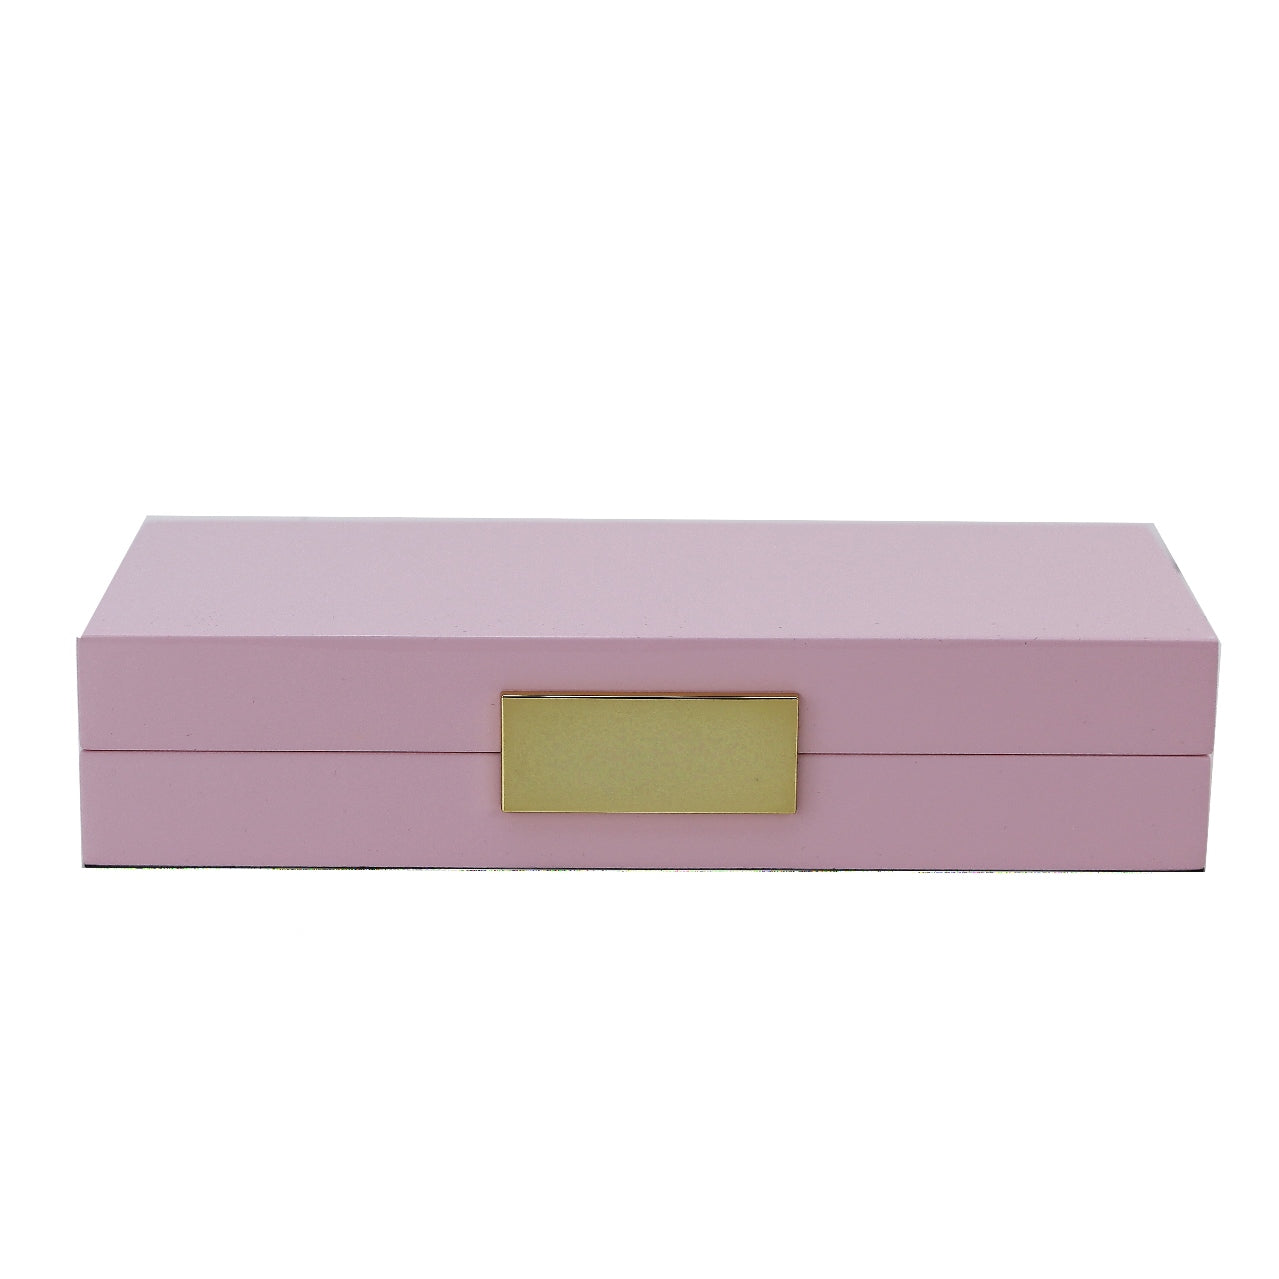 4x9 Box Pink & Silver